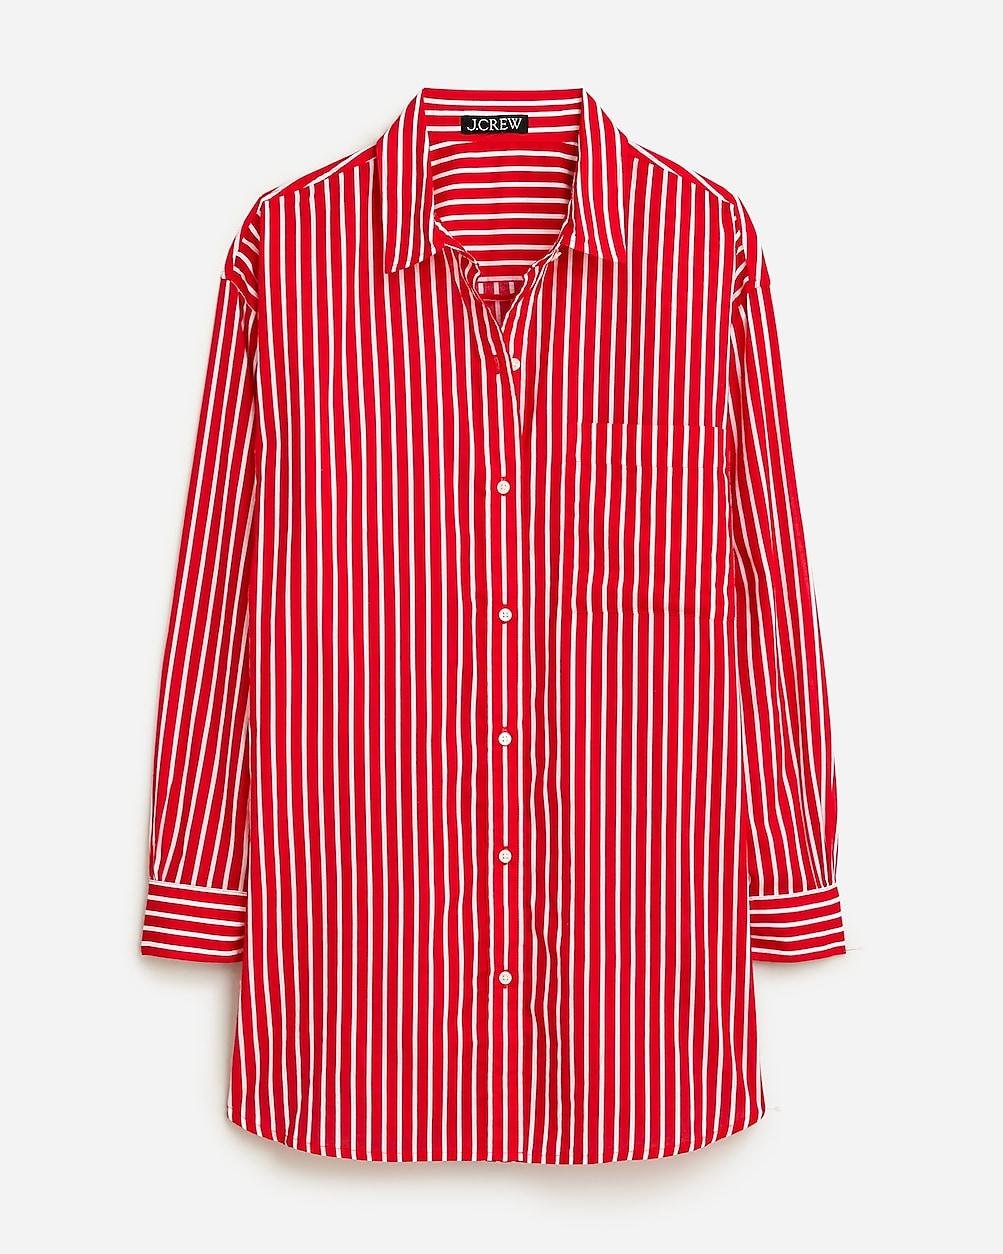 Cotton voile beach shirt in stripe by J.CREW